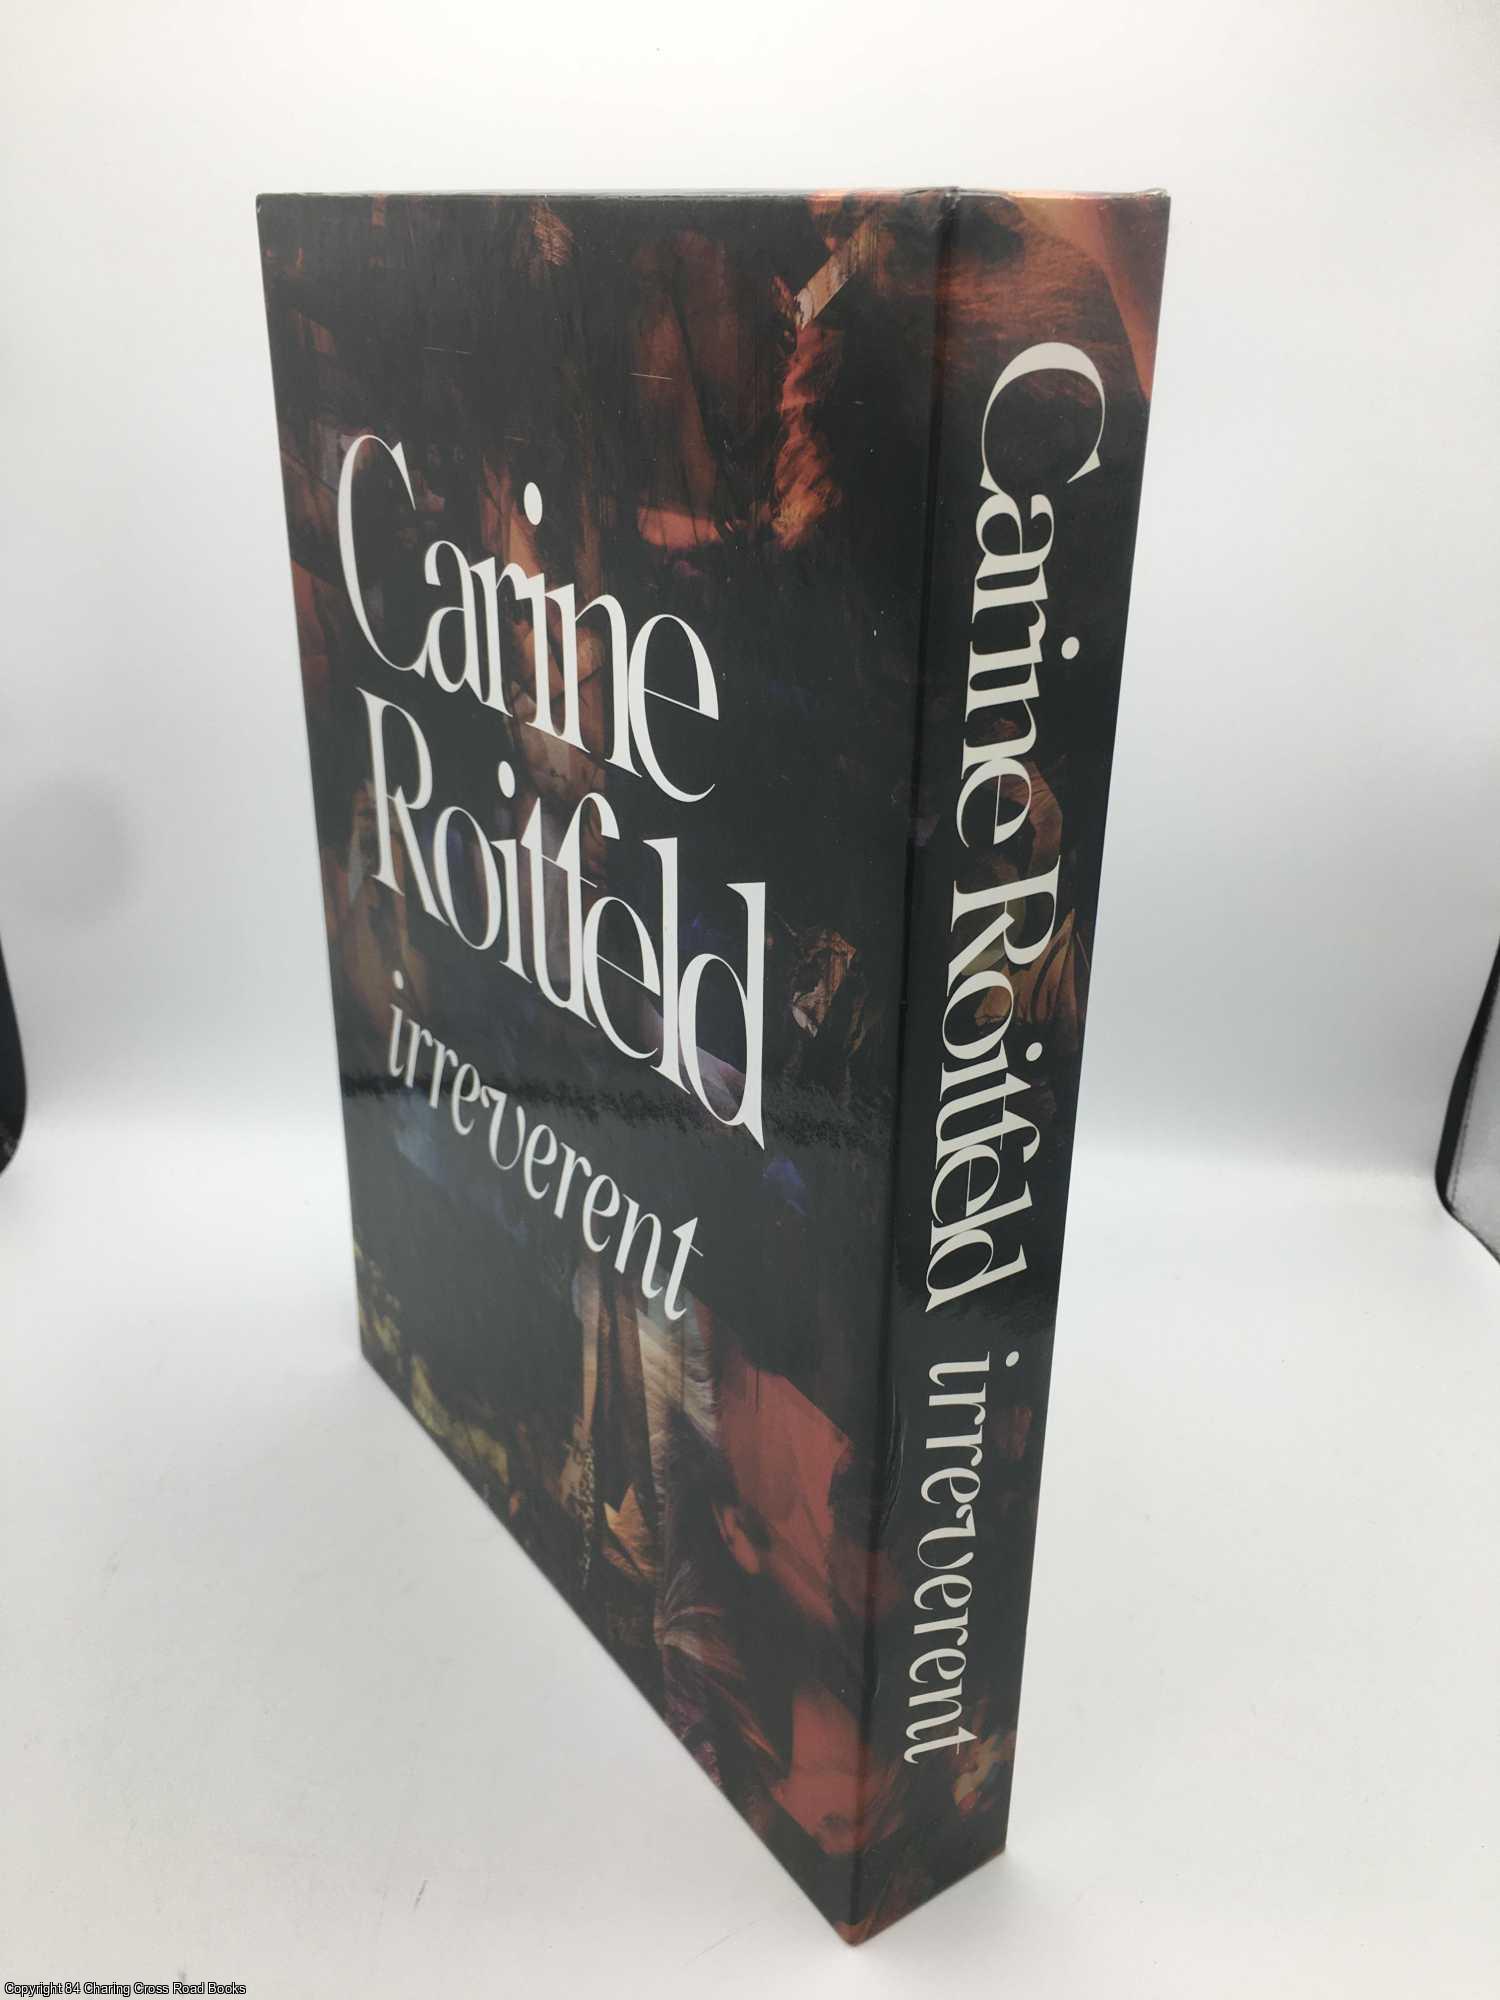 Carine Roitfeld: Irreverent by Carine Roitfeld on 84 Charing Cross Rare  Books